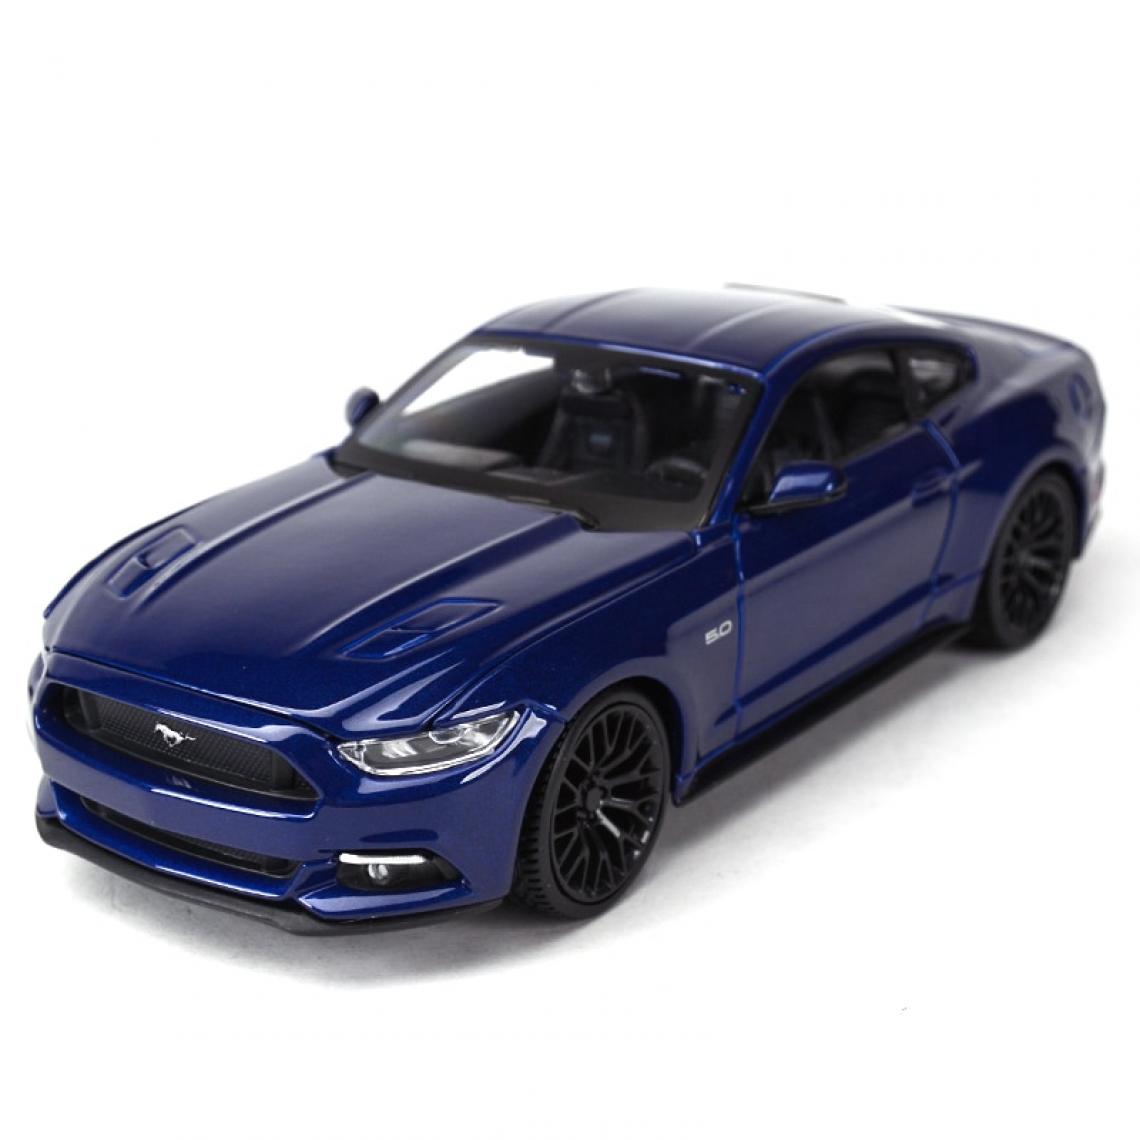 Universal - 1: 24 2015 Ford Mustang GT Coupe Statique Voiture Moulée Collection Modèle Voiture Jouet | Voiture Jouet Moulée sous Pression (Bleu) - Voitures